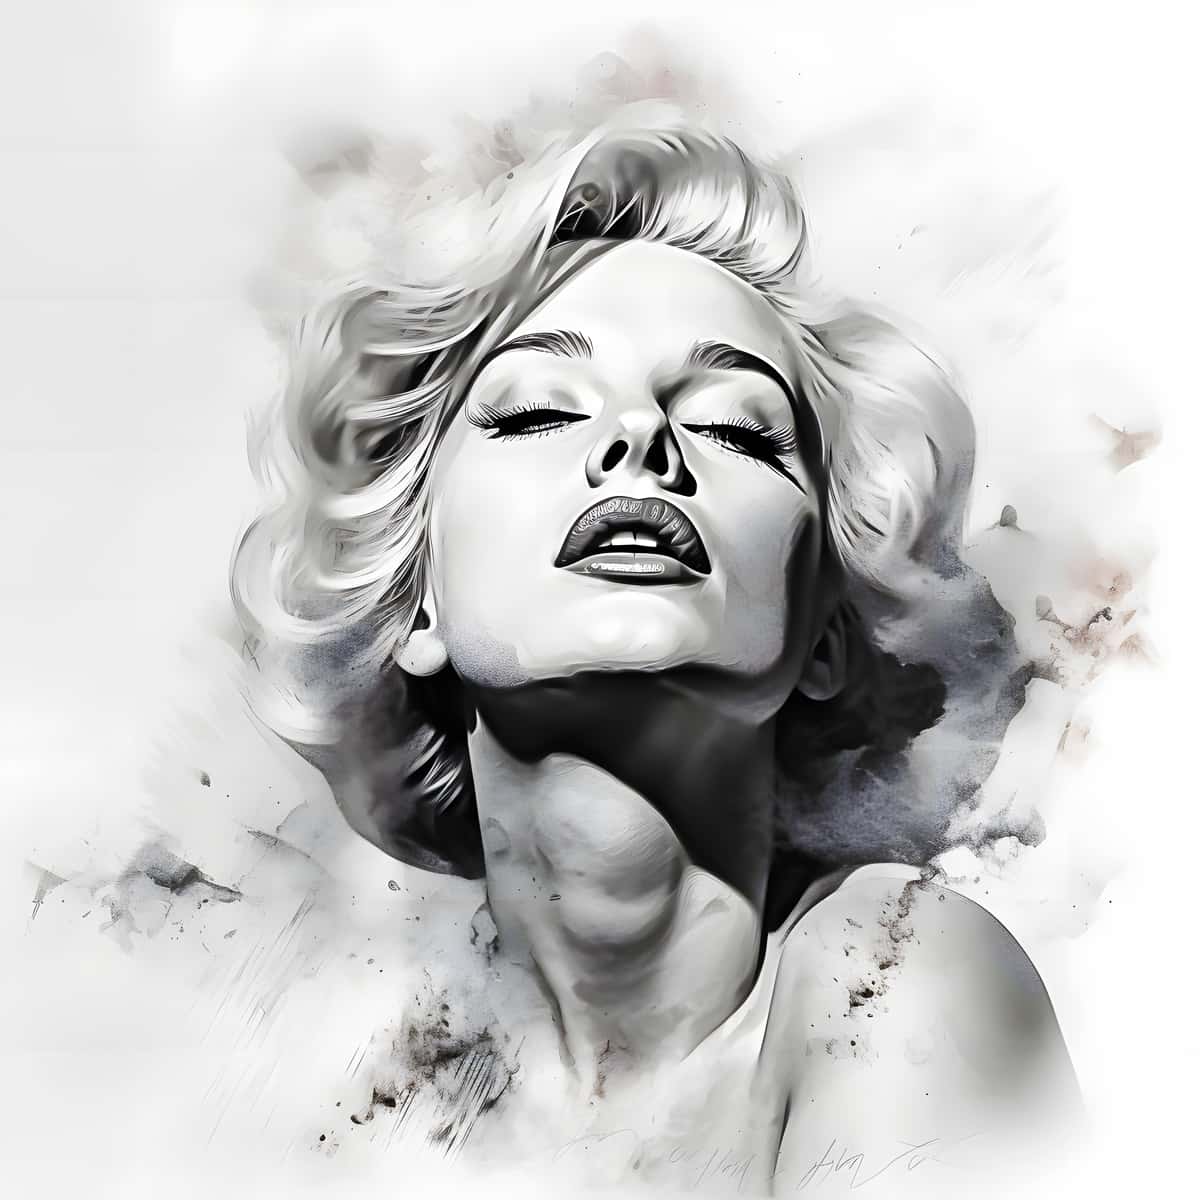 Diamond Painting - Marilyn Monroe - gedruckt in Ultra-HD - Menschen, Neu eingetroffen, Quadratisch